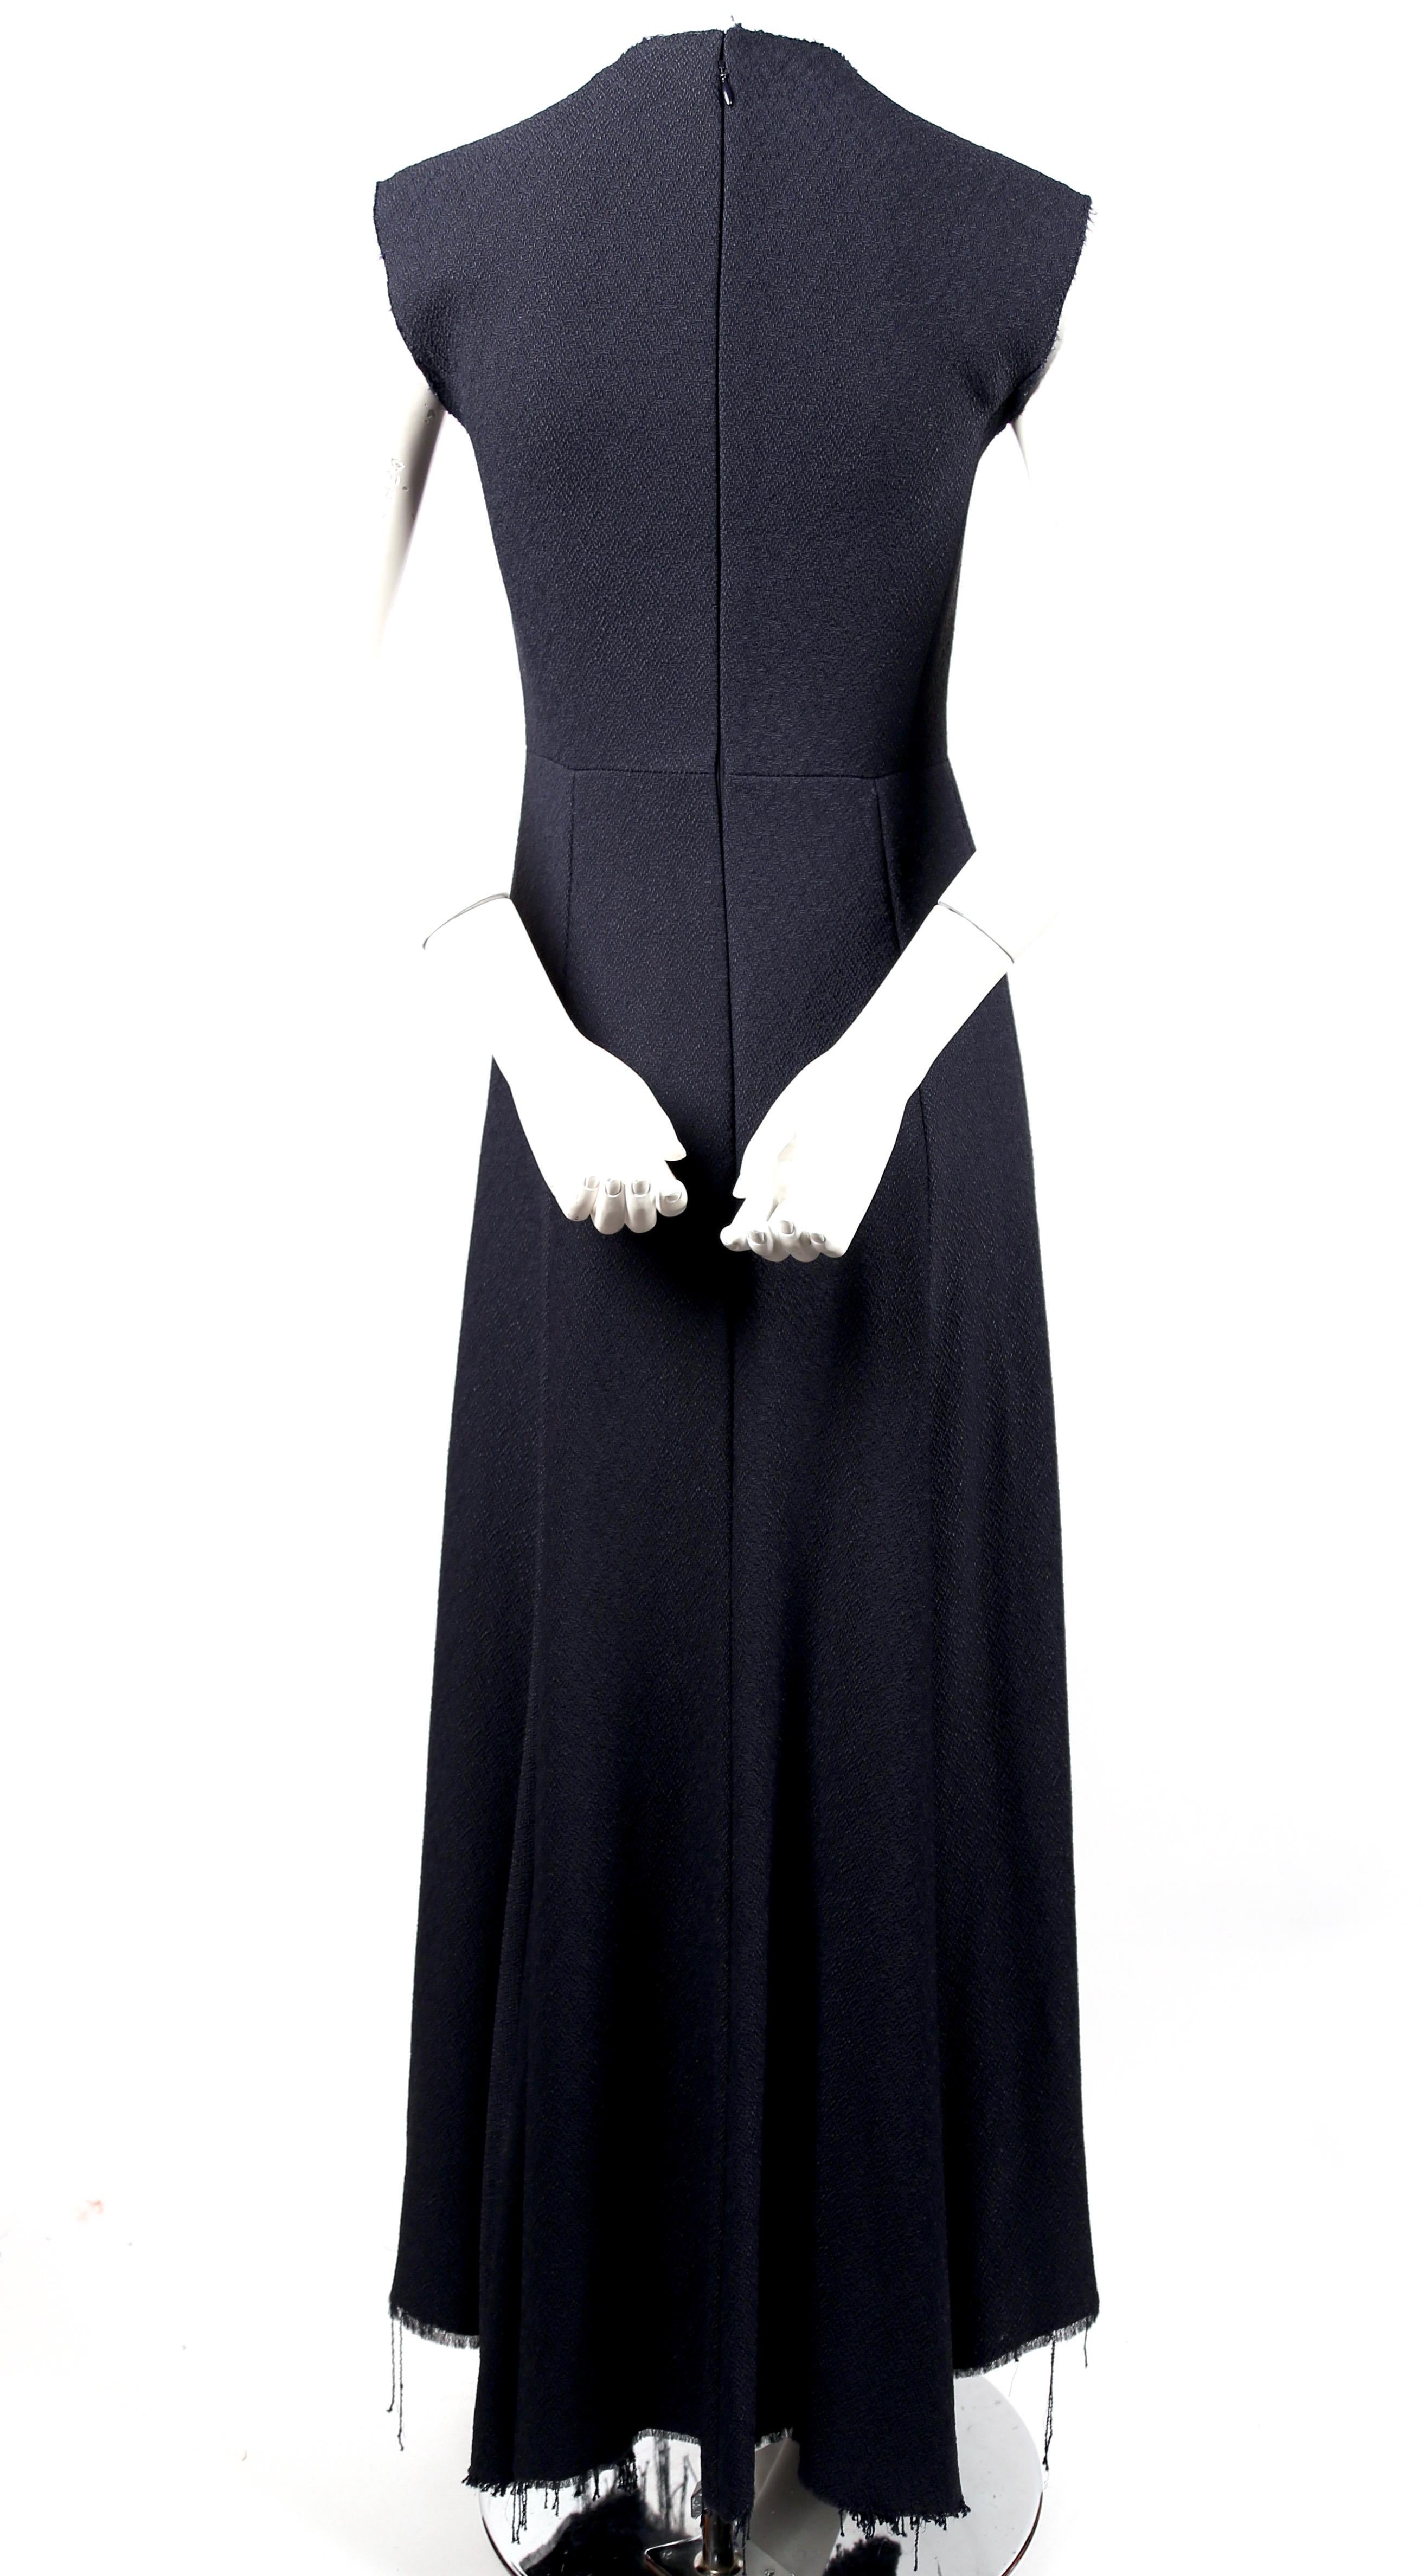 Black Celine by Phoebe Philo navy runway dress with fringed hemline